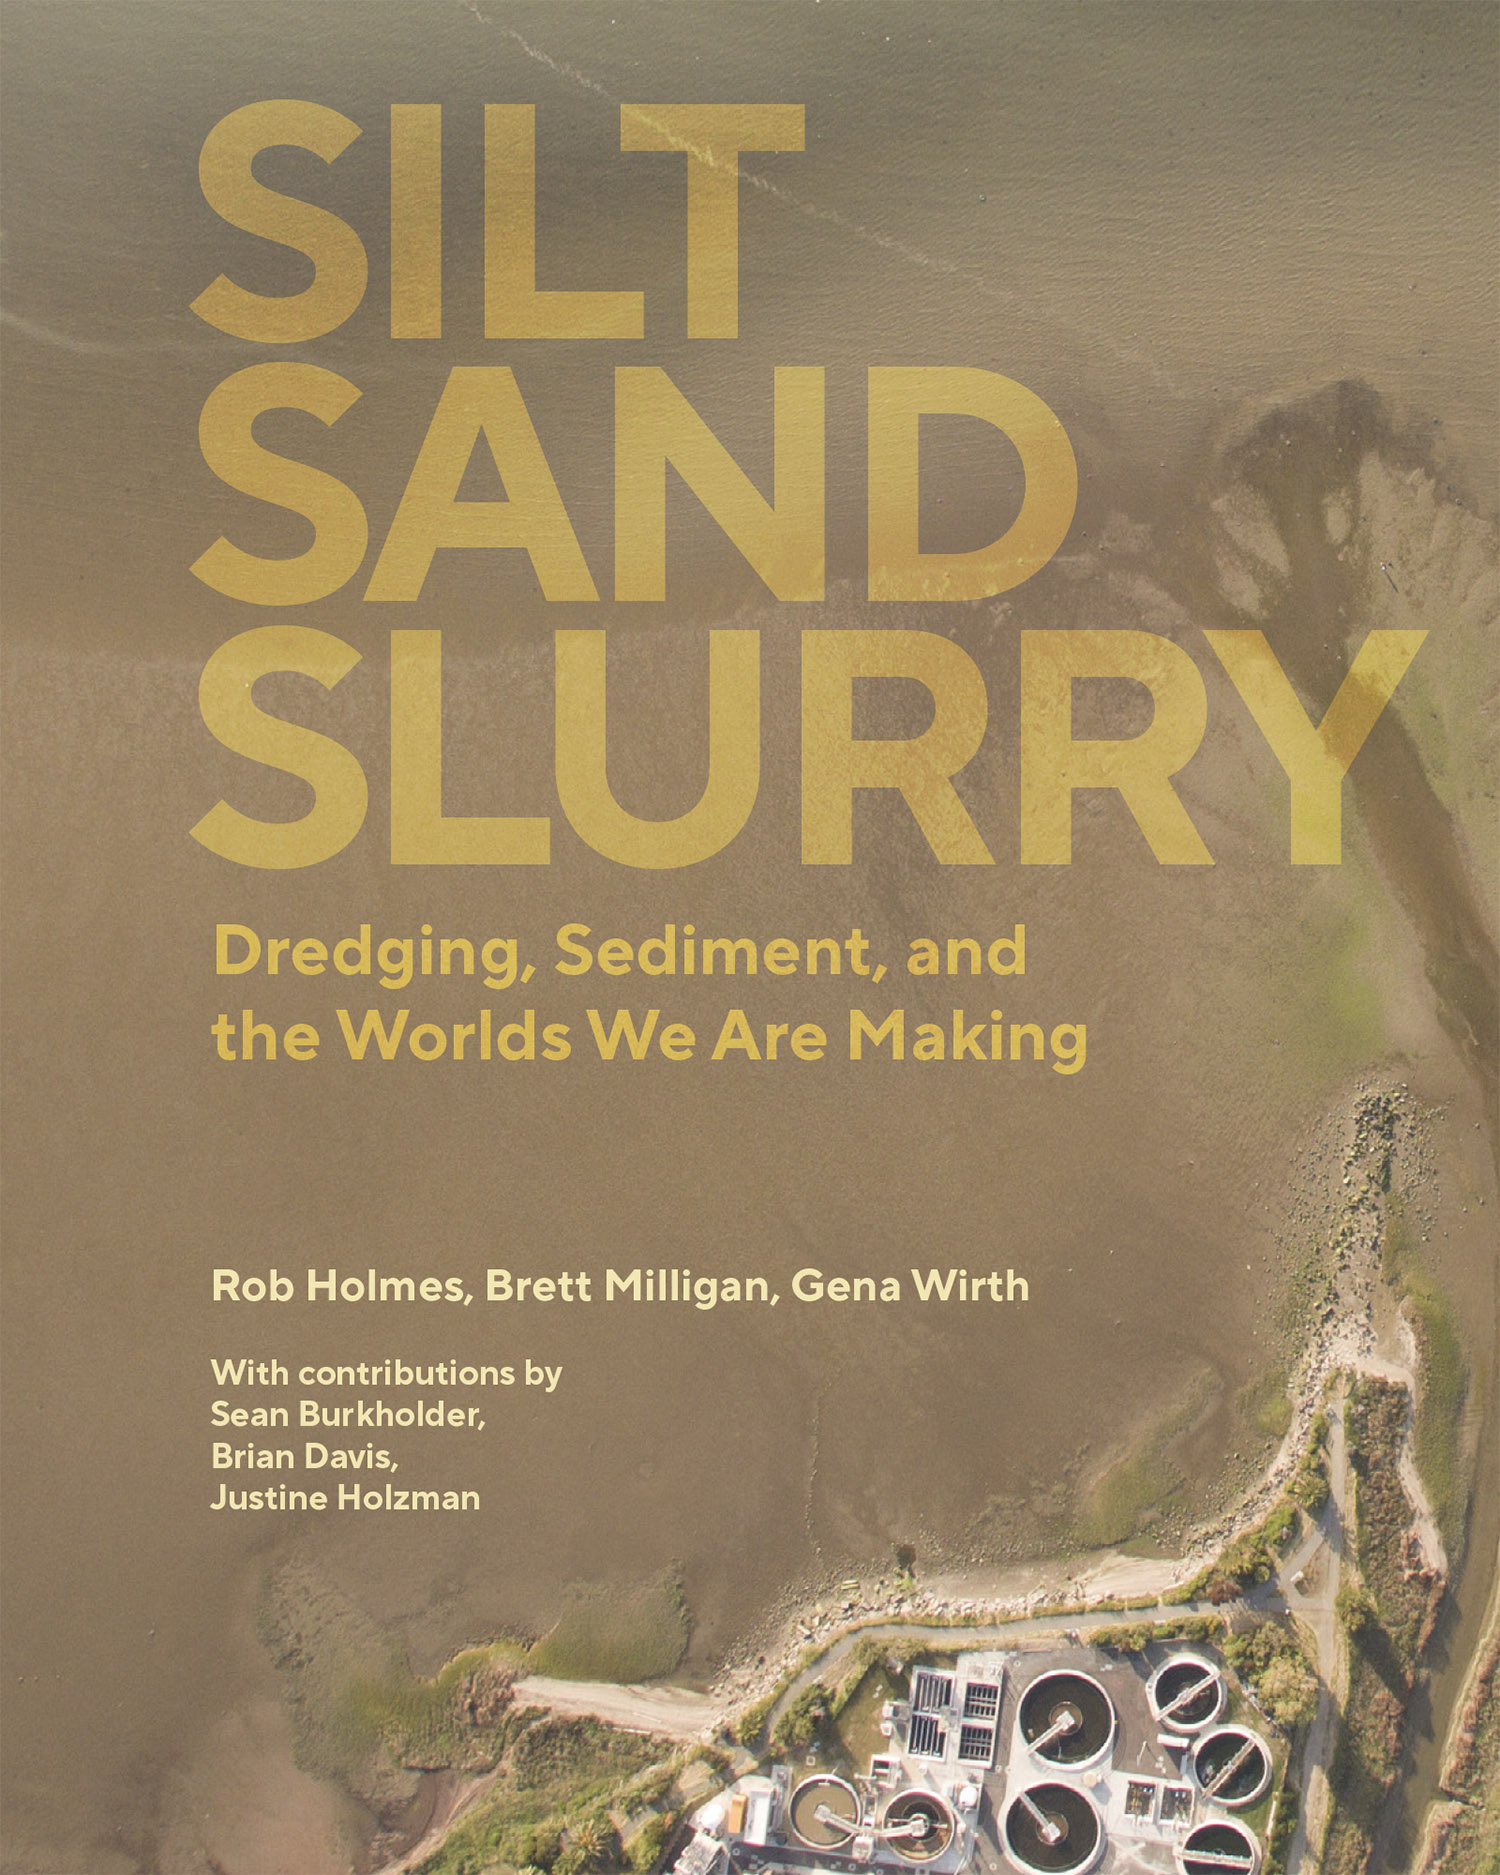 silt-sand-and-slurry-copy